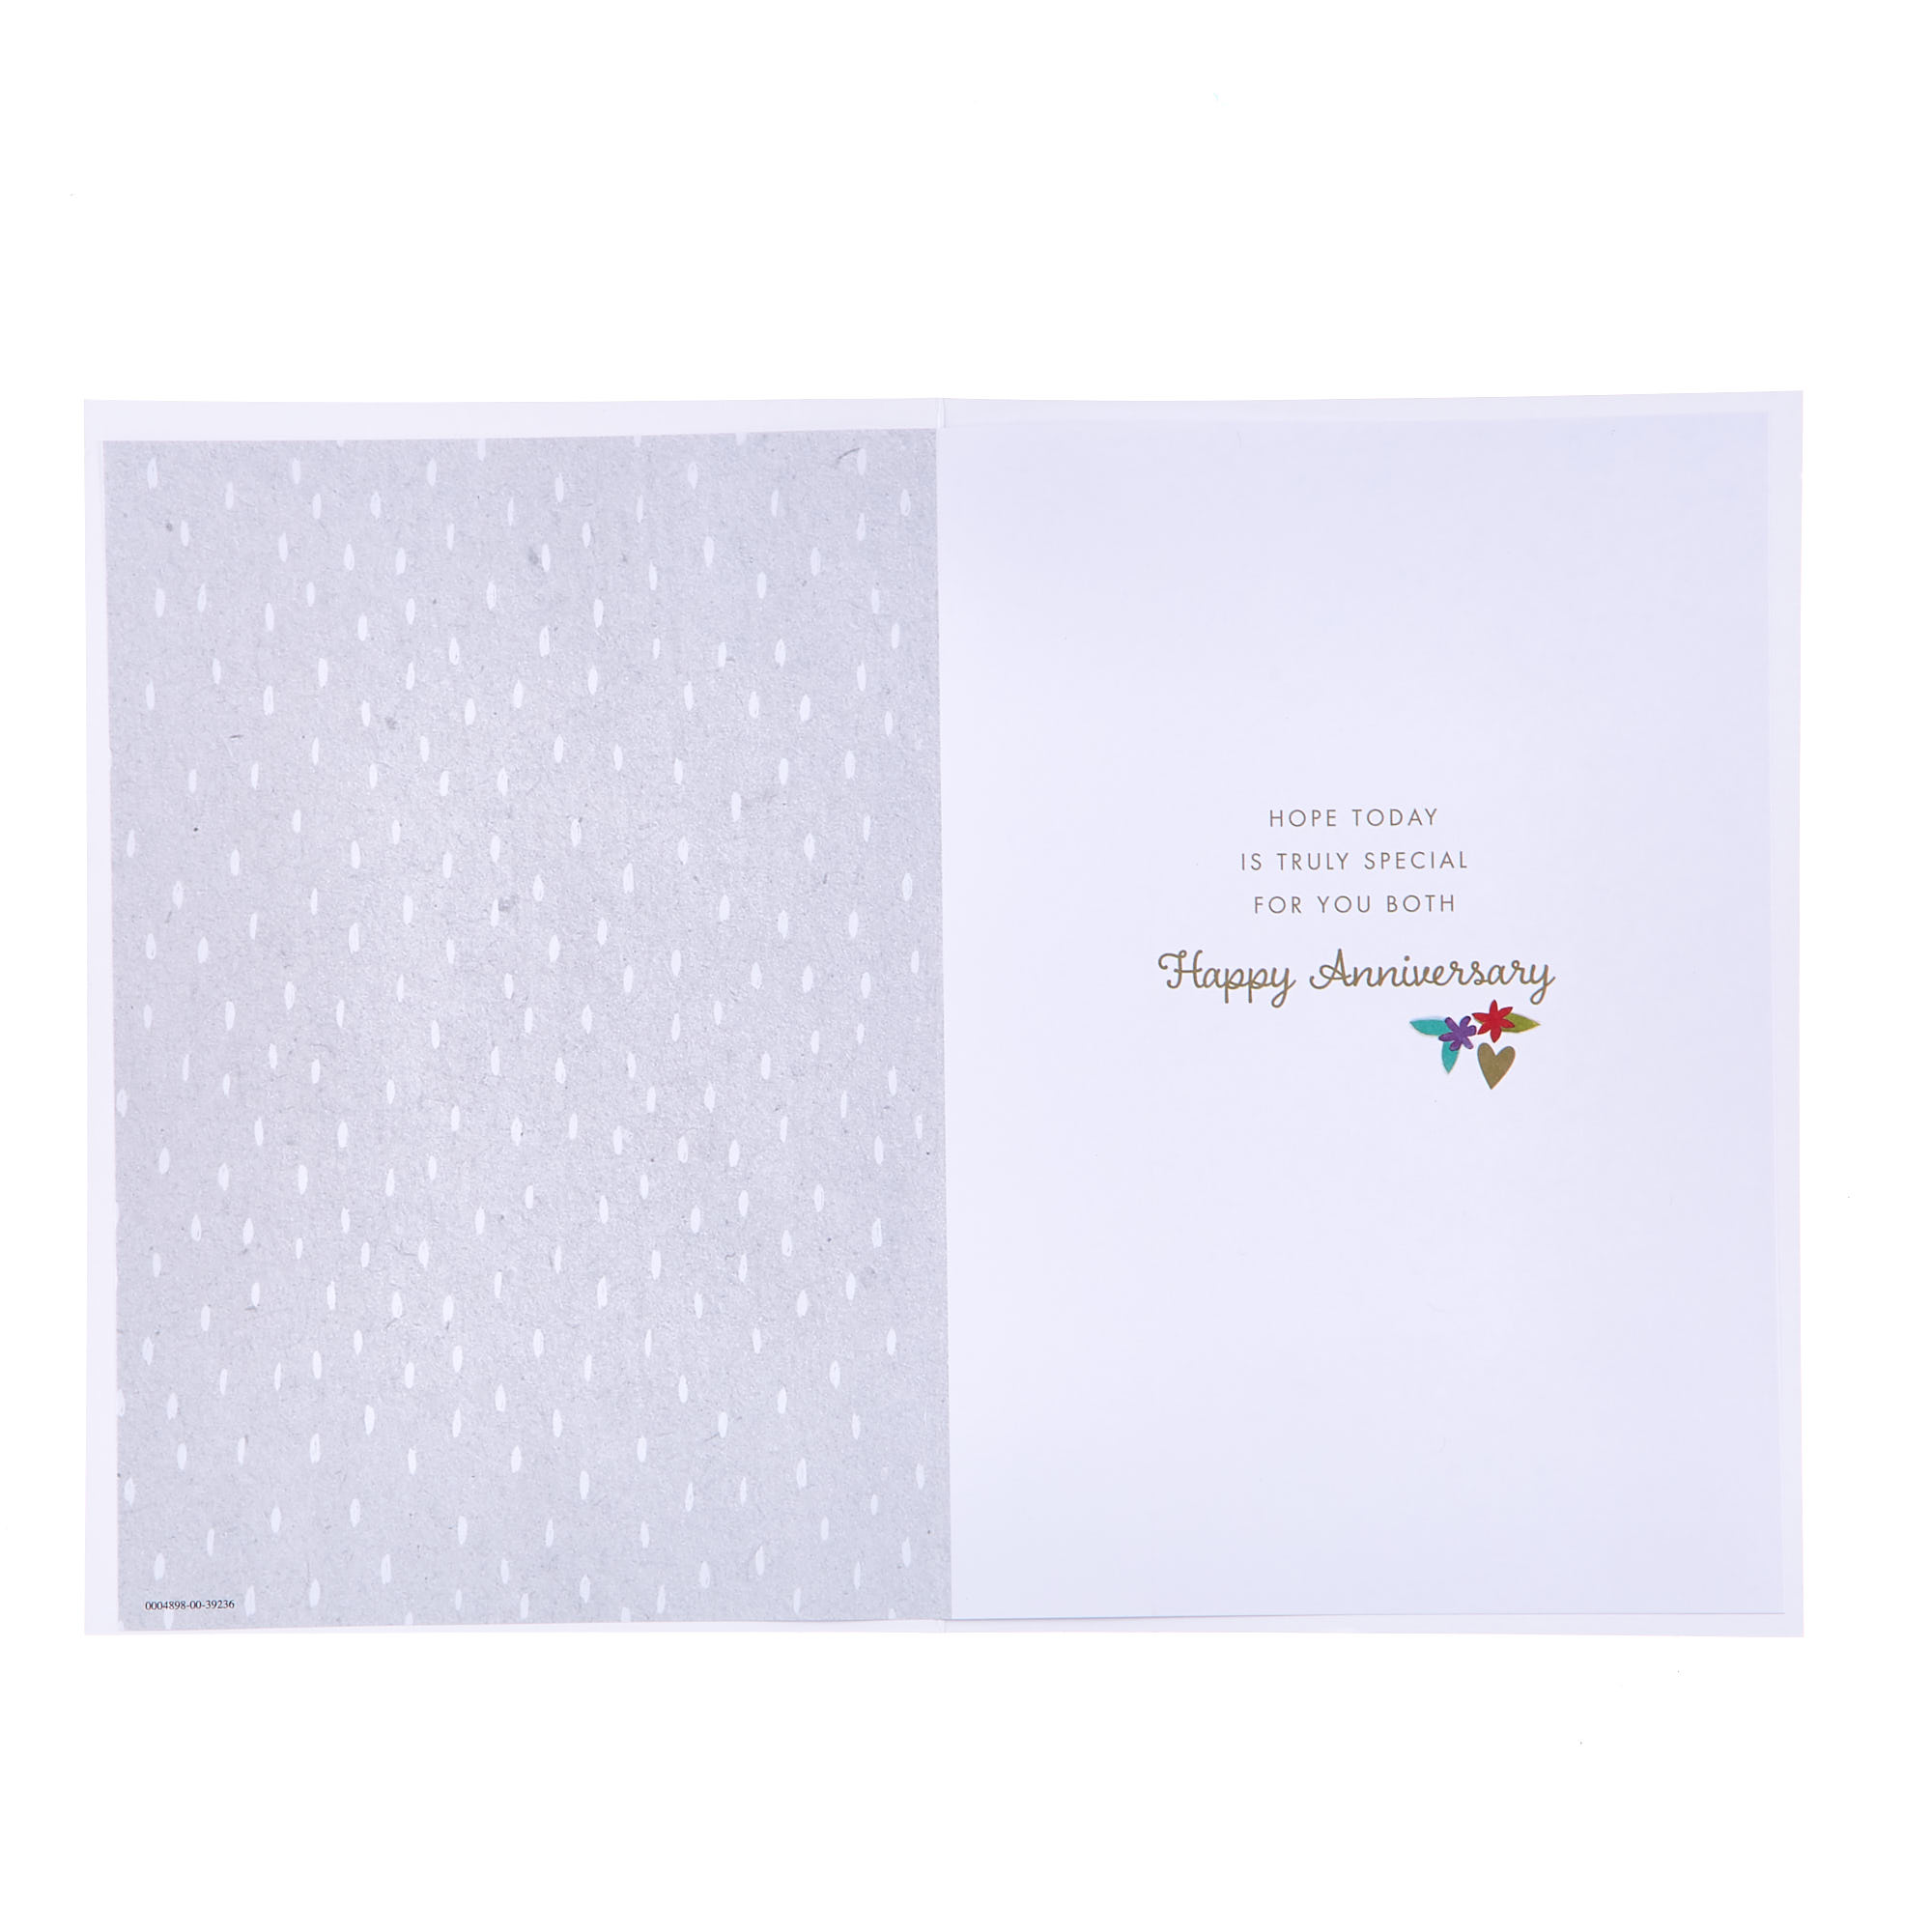 Anniversary Card - Sending Love & Best Wishes 